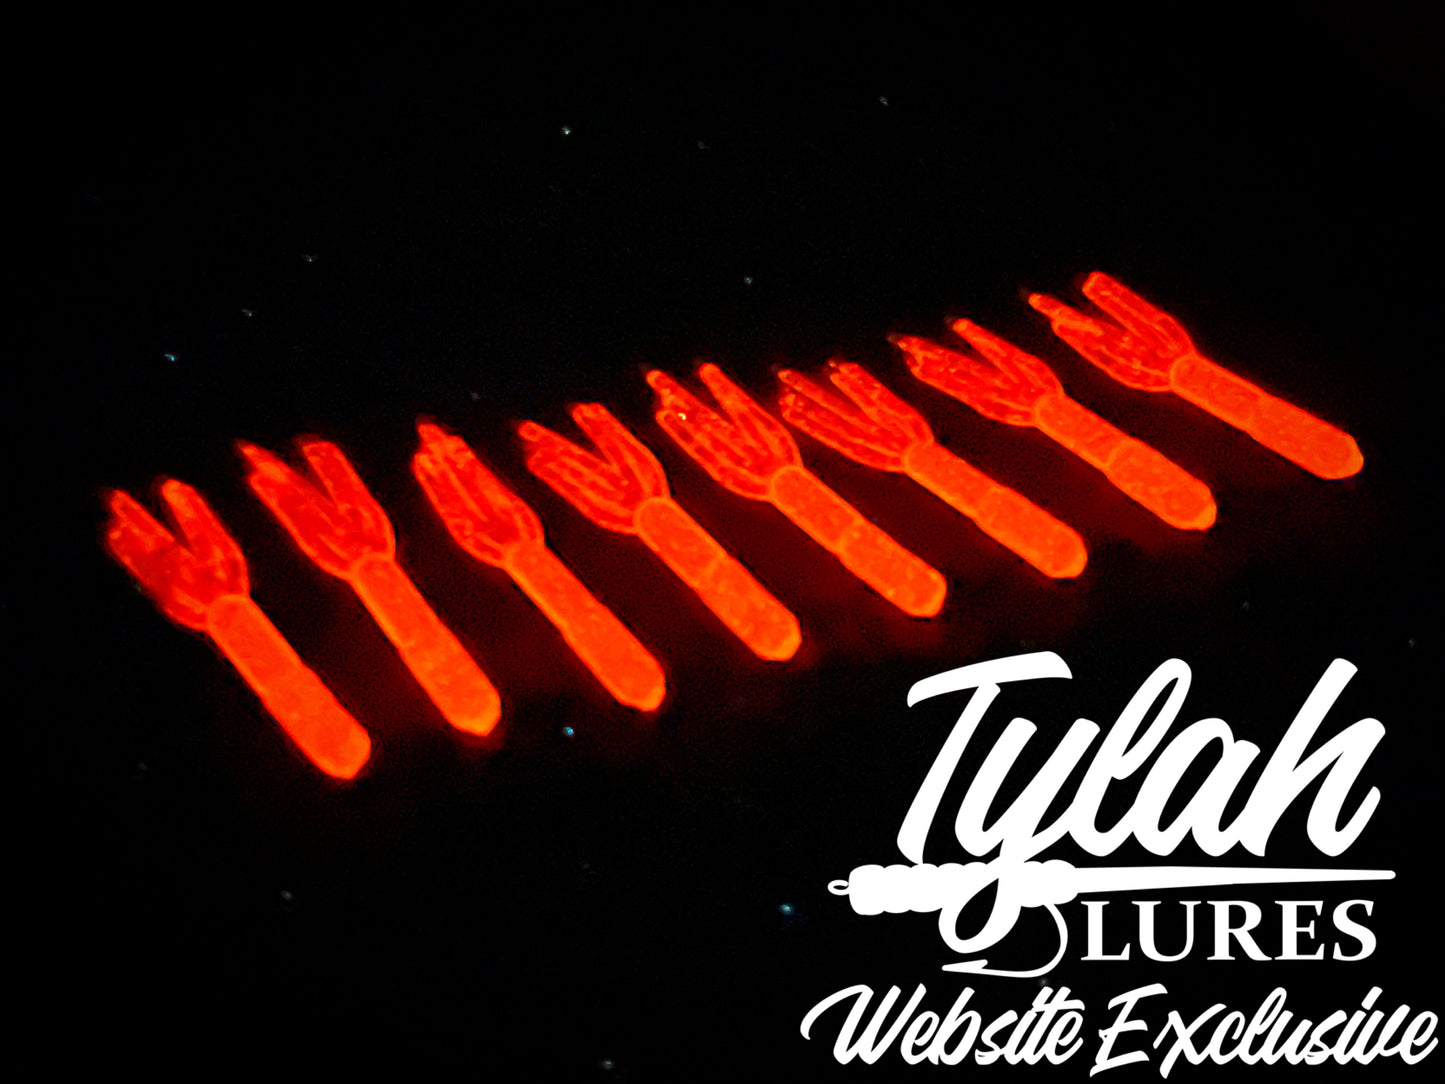 TylahLures Website Exclusive UV Red Glow Shidasa 1in